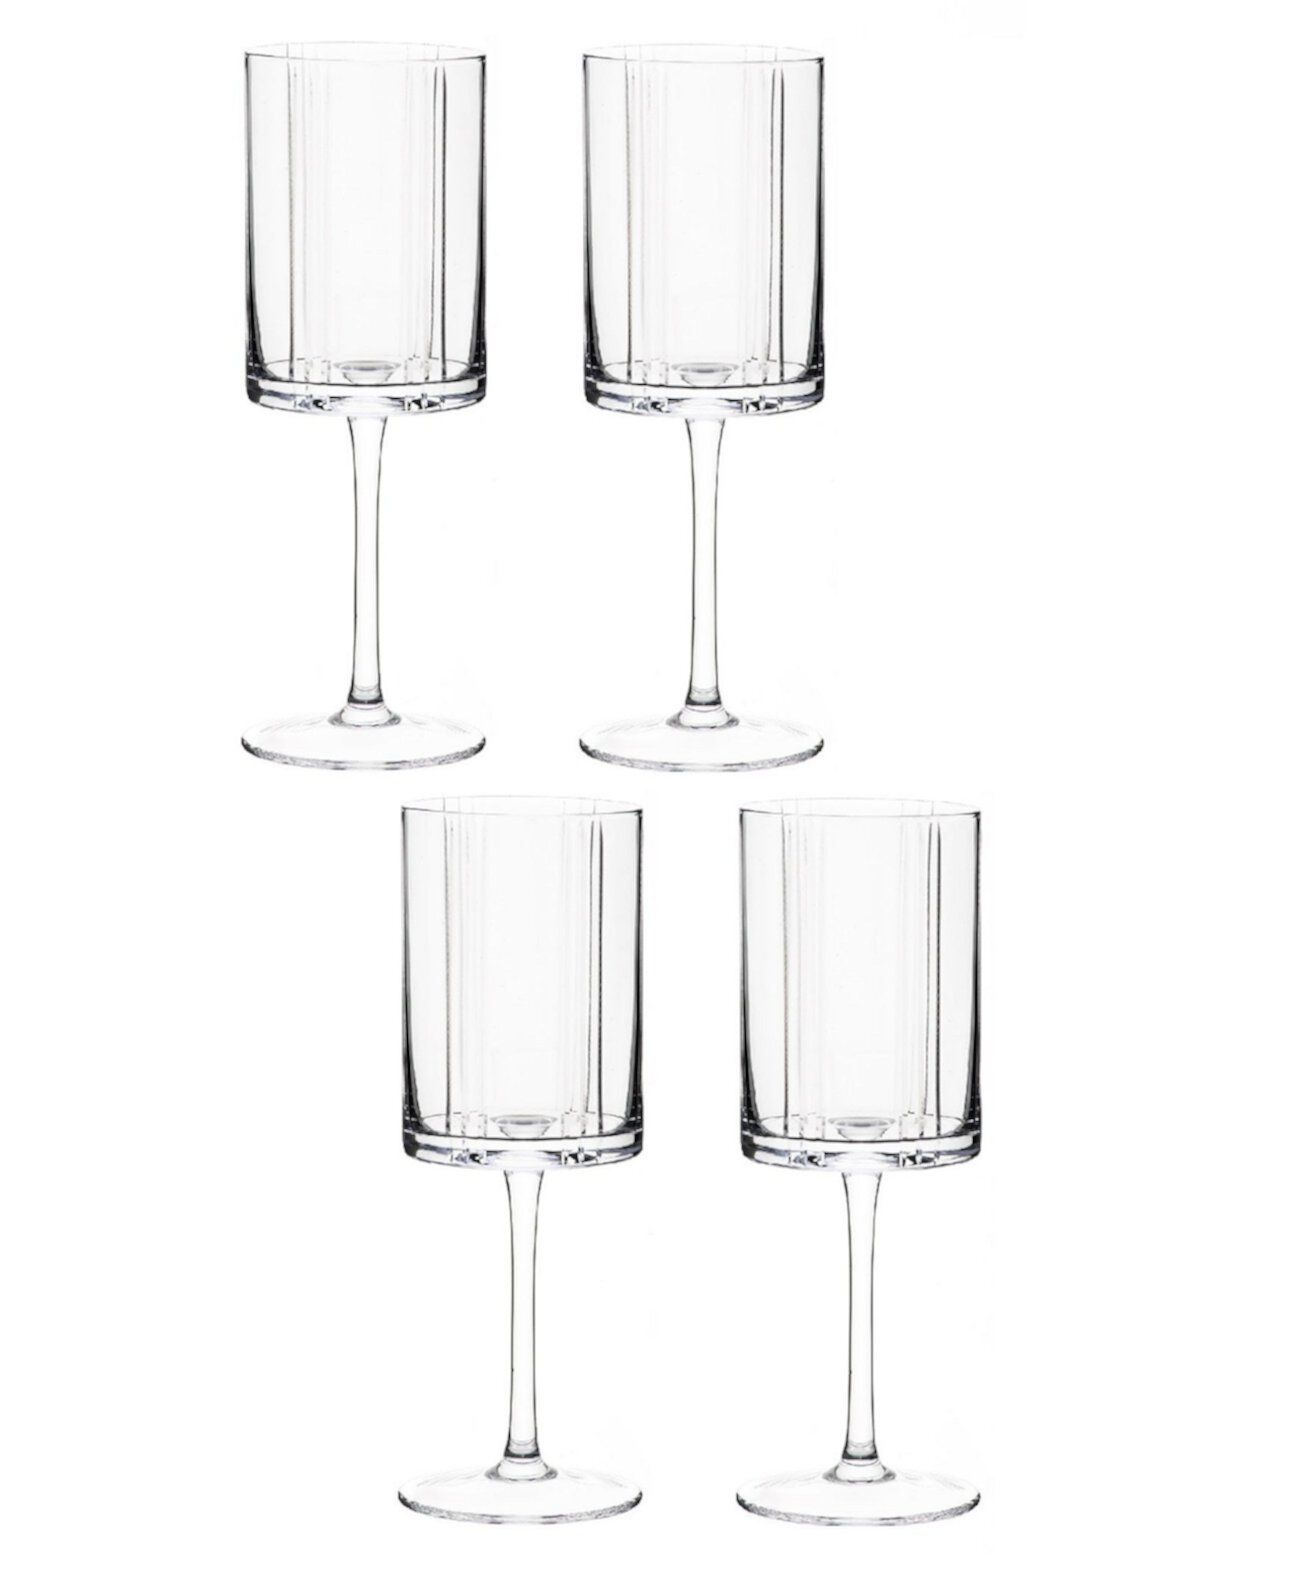 Бокалы Trilogy Crystal, набор из 4 шт. Qualia Glass